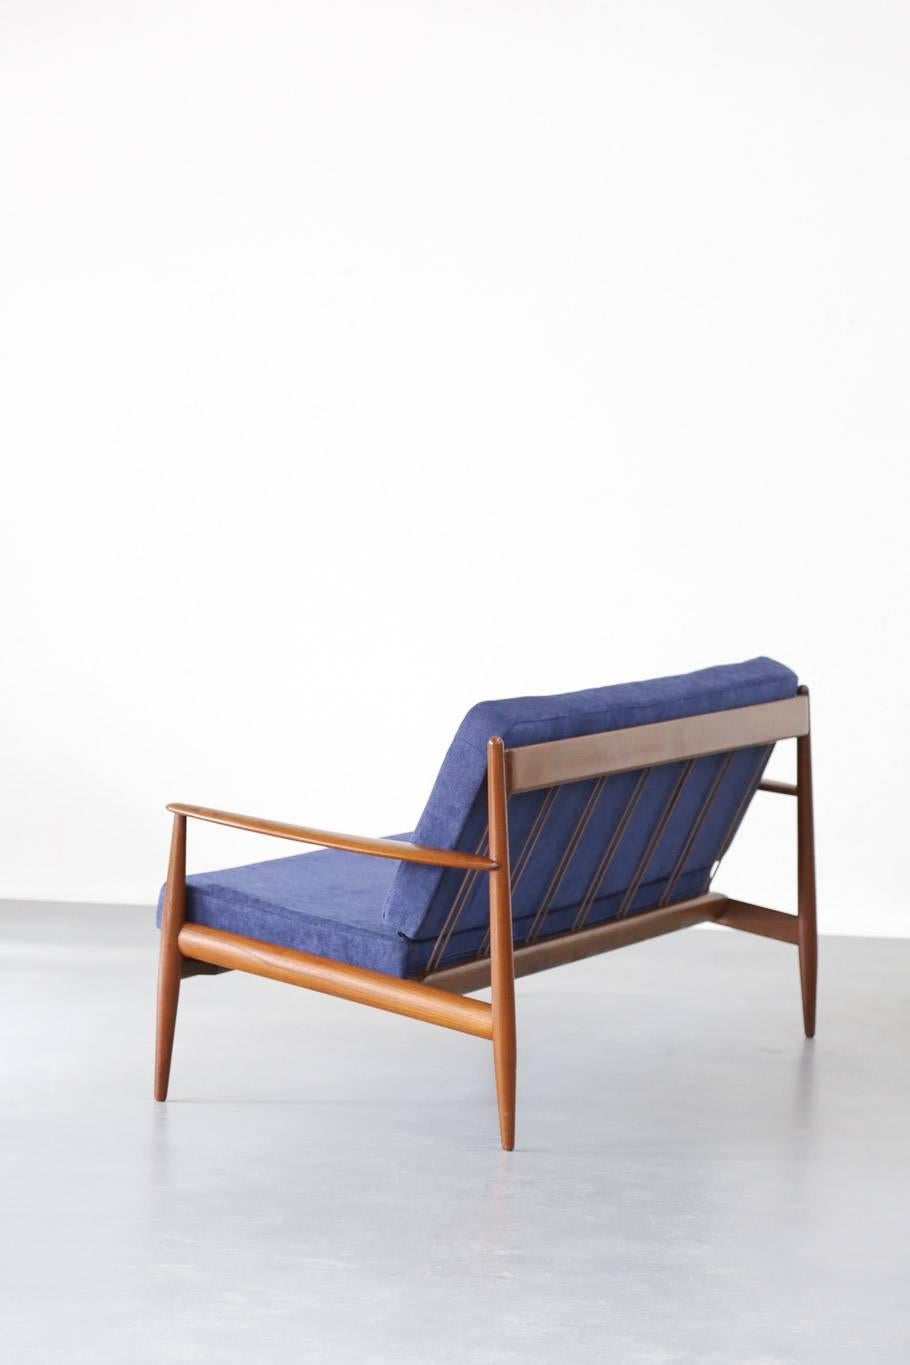 Fabric Modern Grete Jalk Danish Sofa, France and Son Freshly Reupholstered For Sale